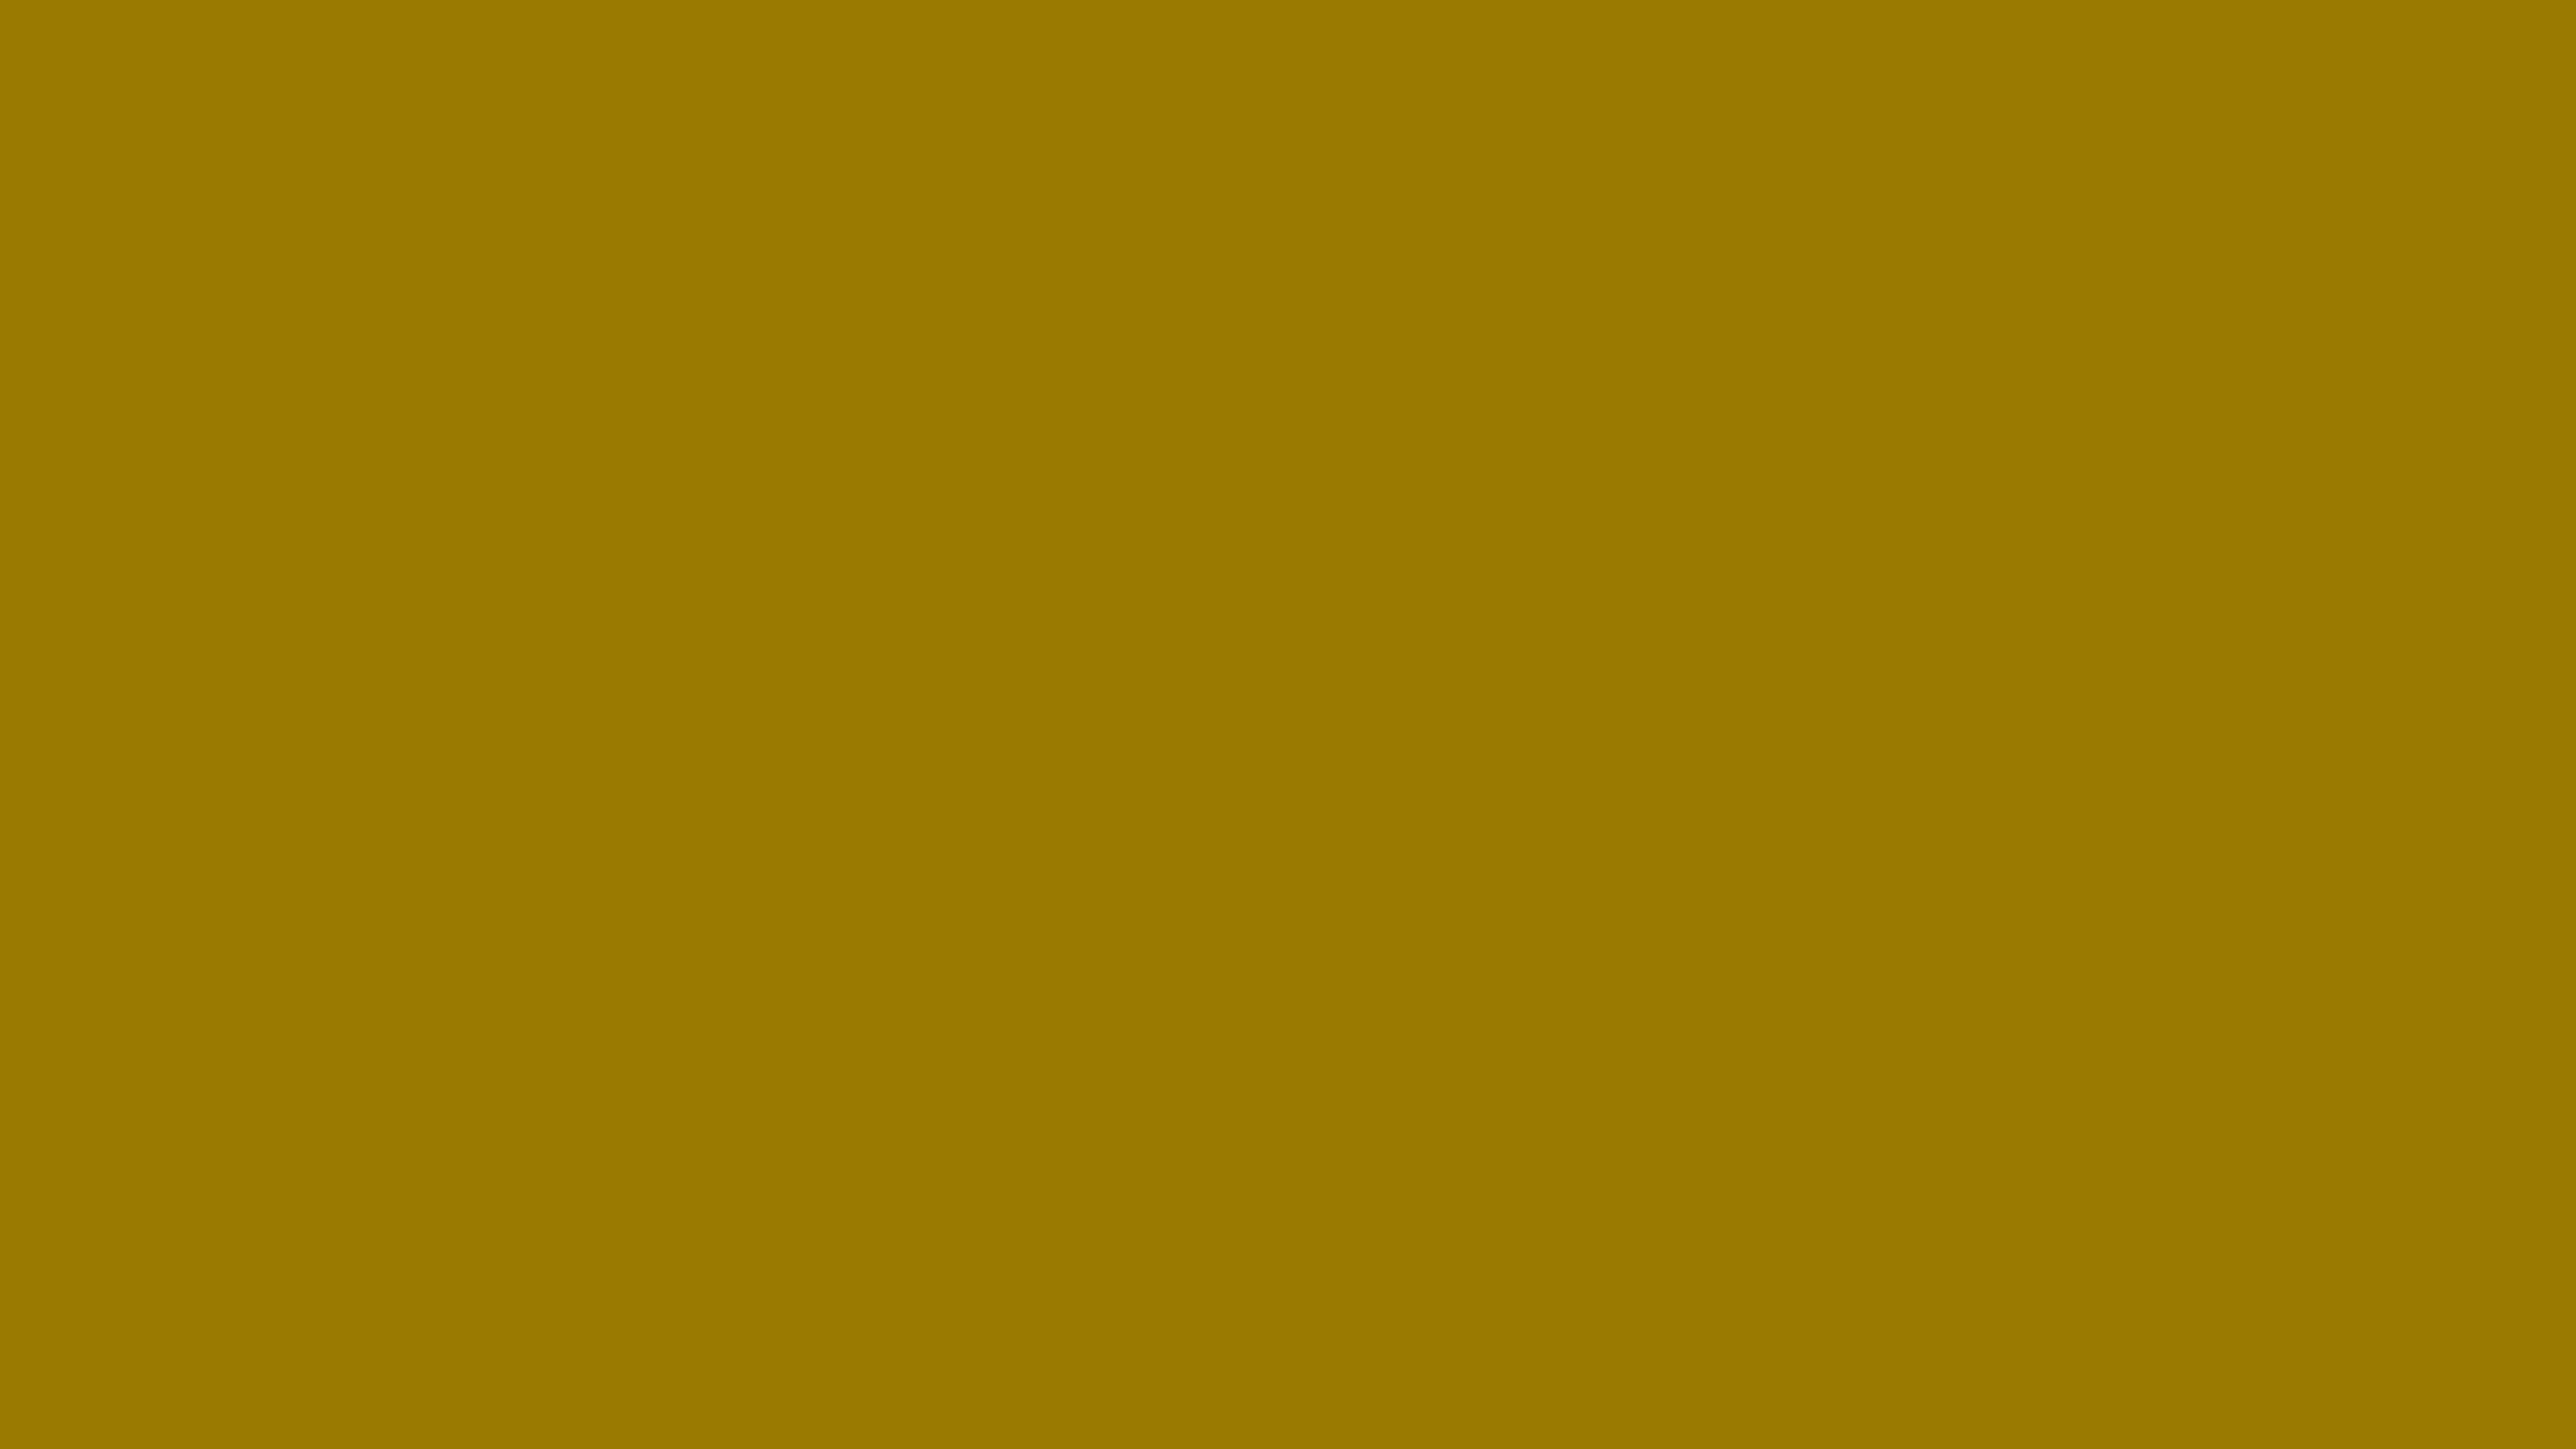 yellowish brown